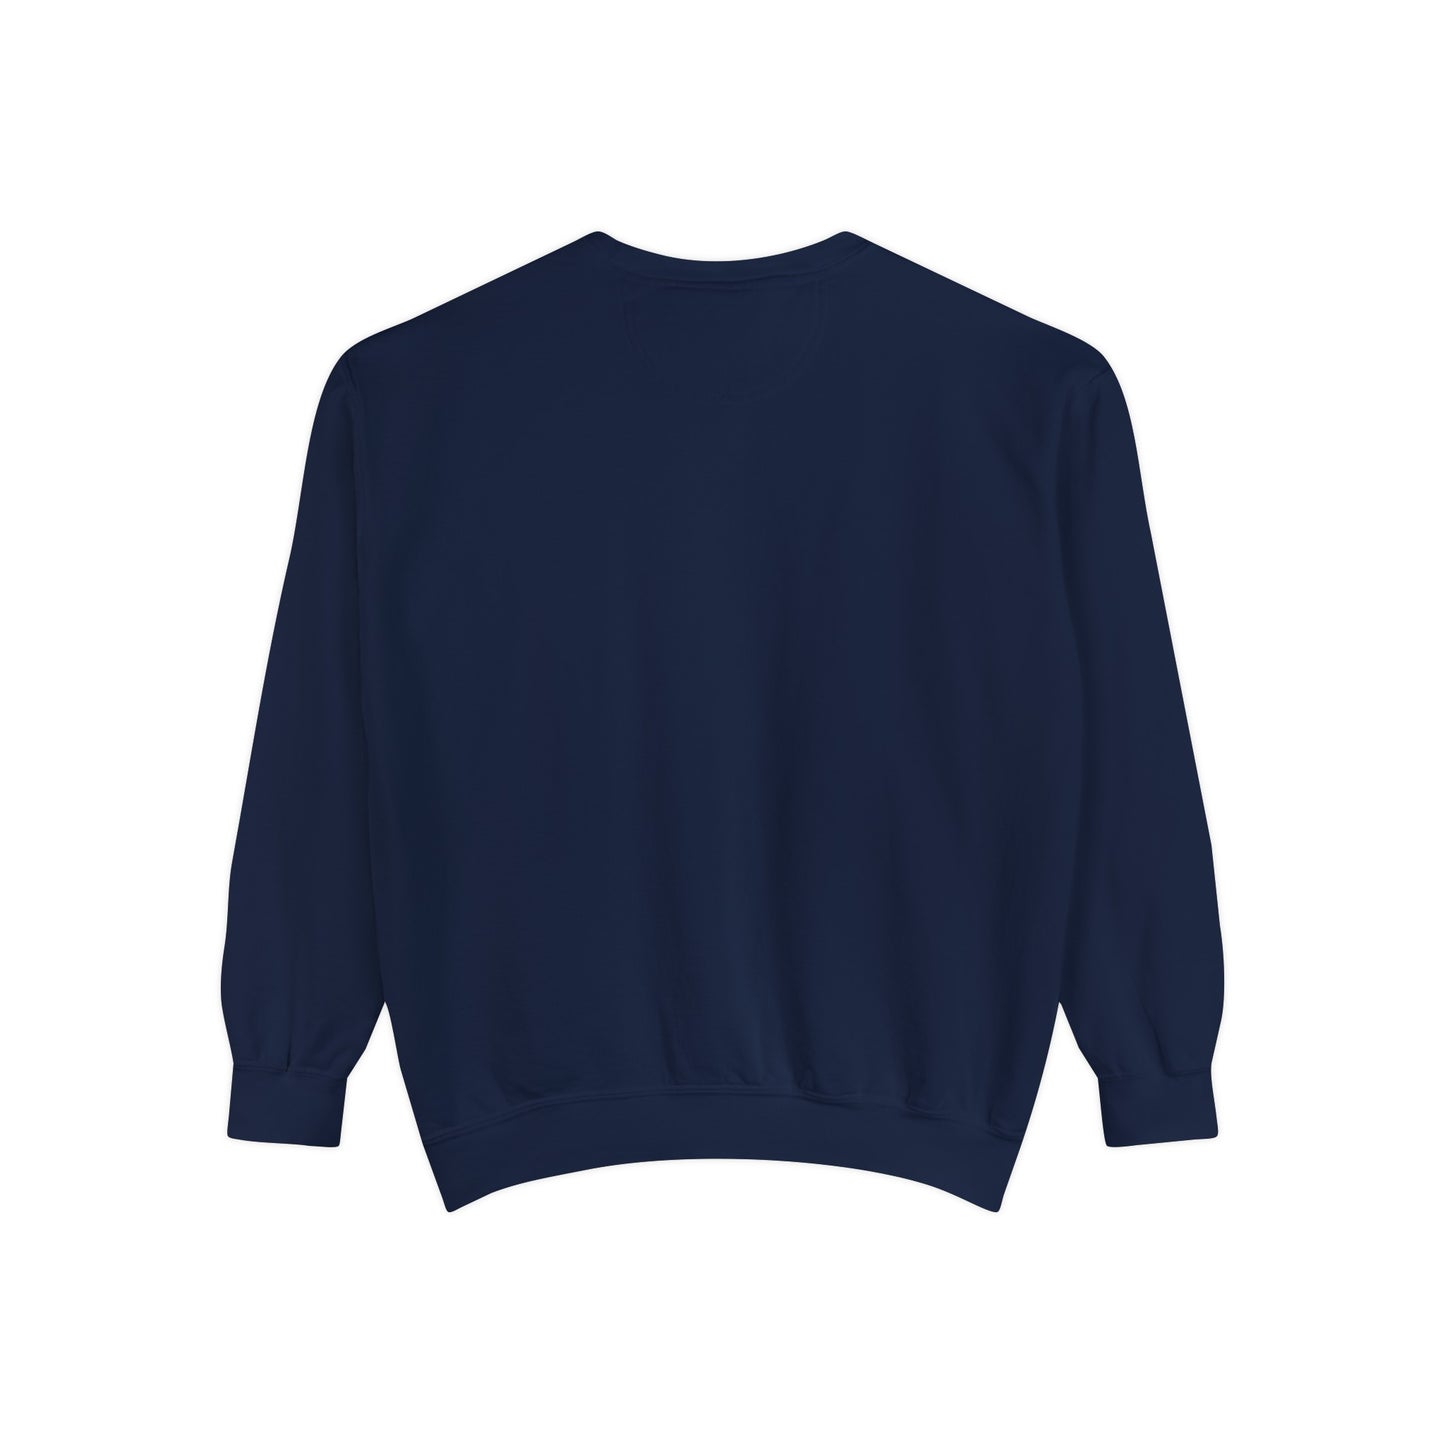 Arsenal Baseball sweatshirt by Comfort Colors